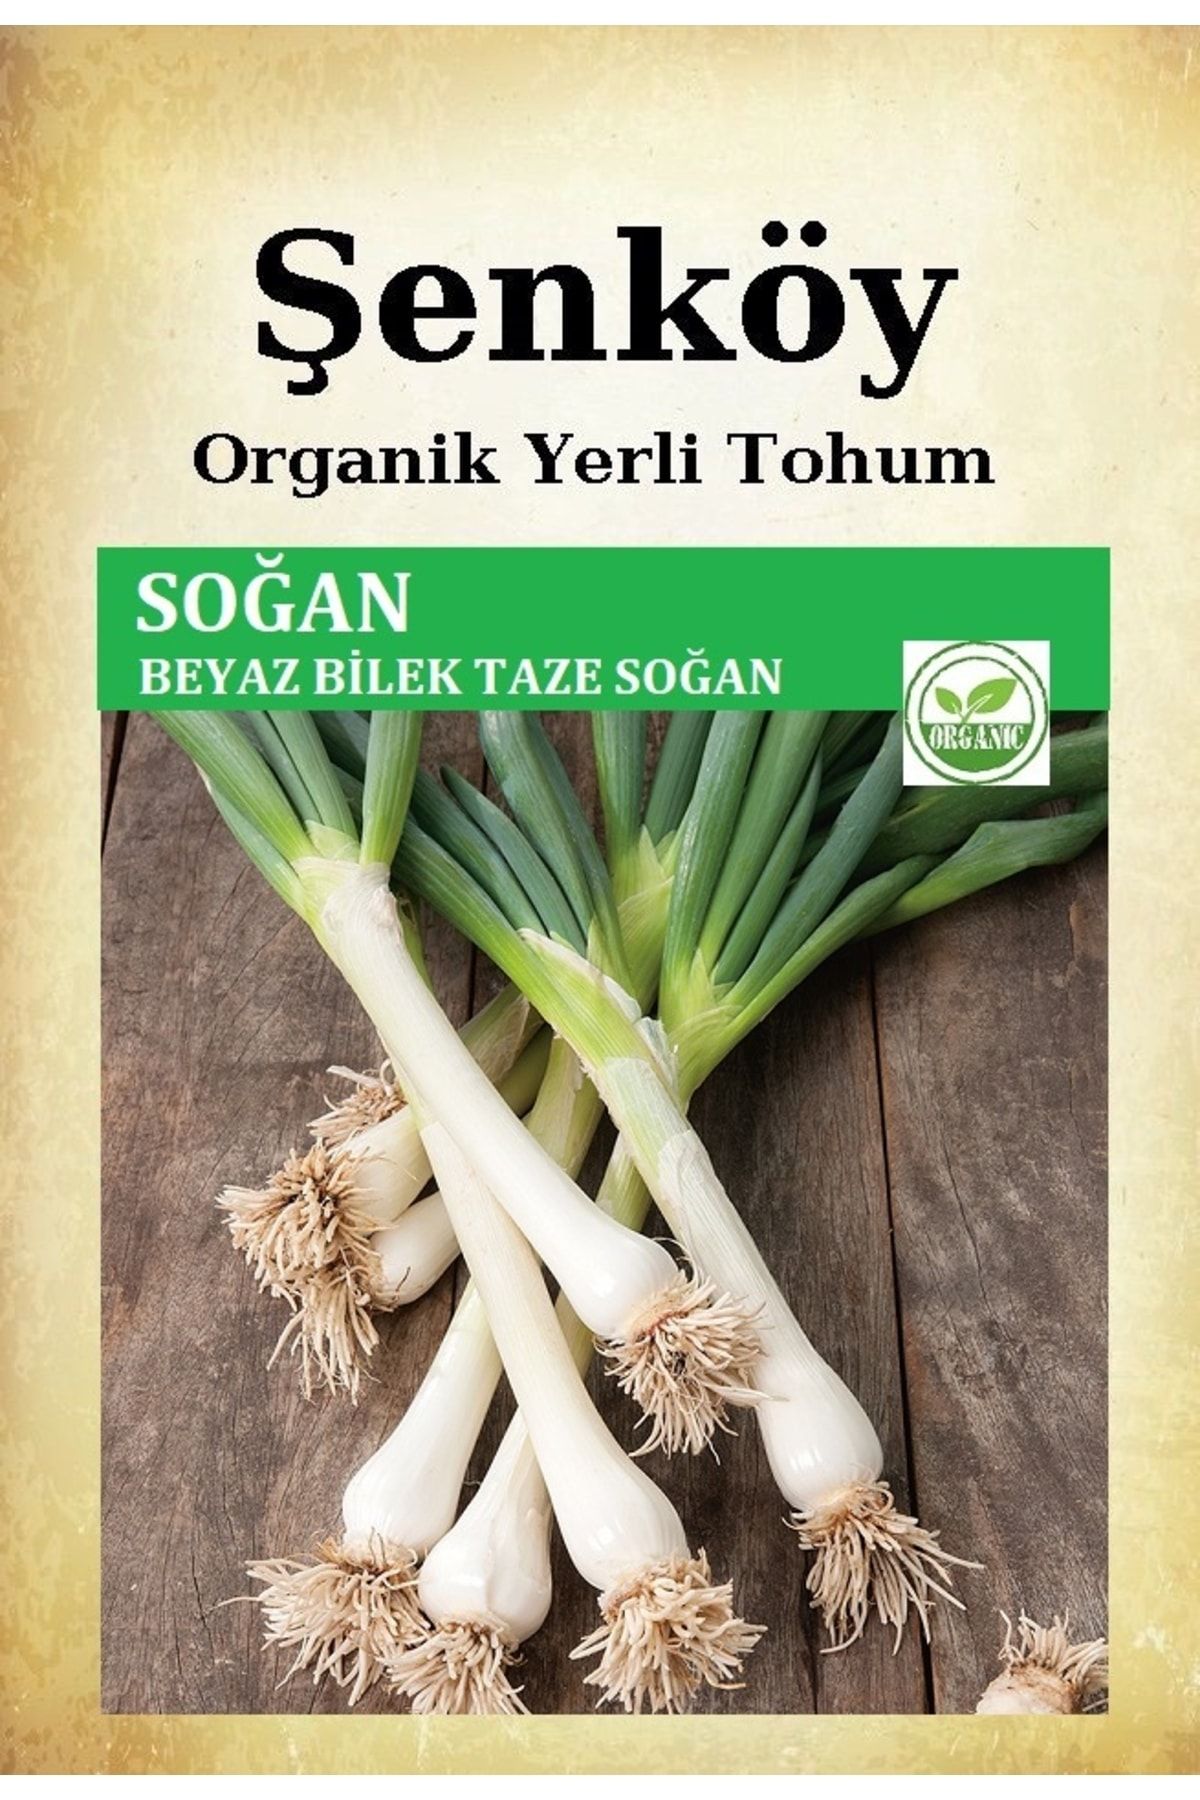 Şenköy Yerli Yeşil Soğan Tohumu Organik Ata Beyaz Bilek Taze Soğan Tohumu Paket 10 Gr 3000 Adet